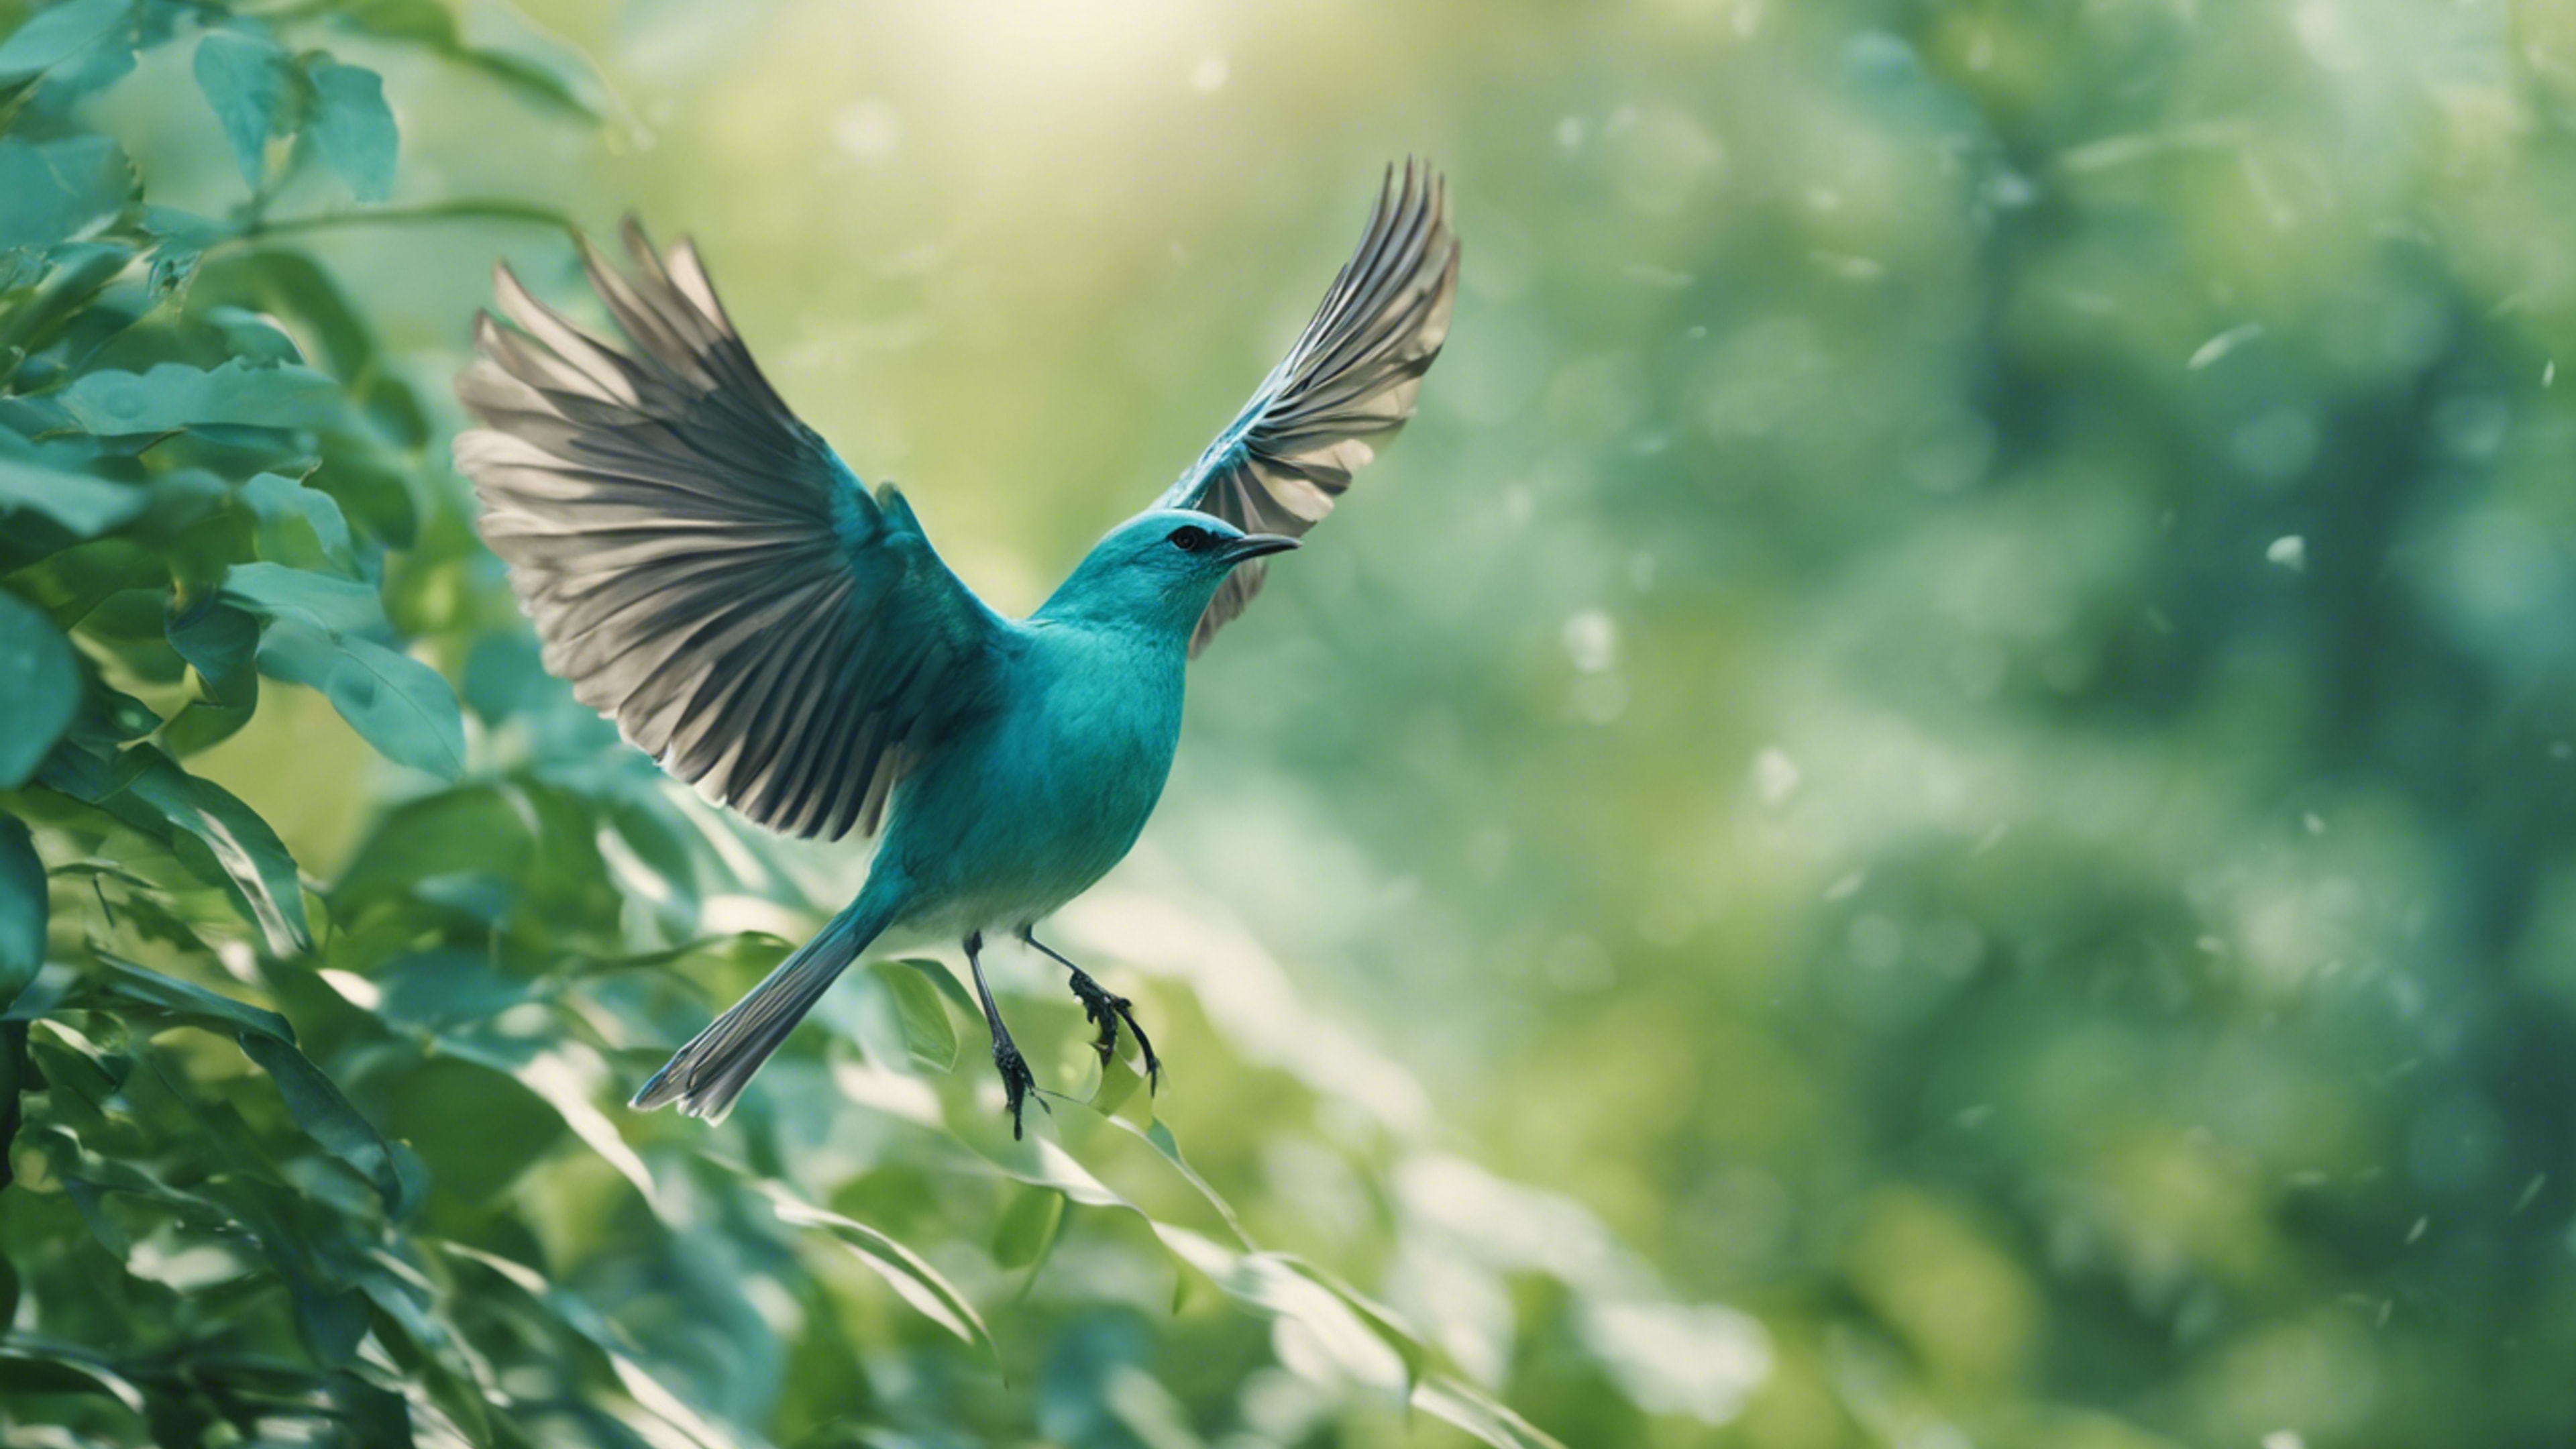 An aqua-blue bird taking flight over a sea of green trees. Wallpaper[ad3524ad0c334fc3bb36]